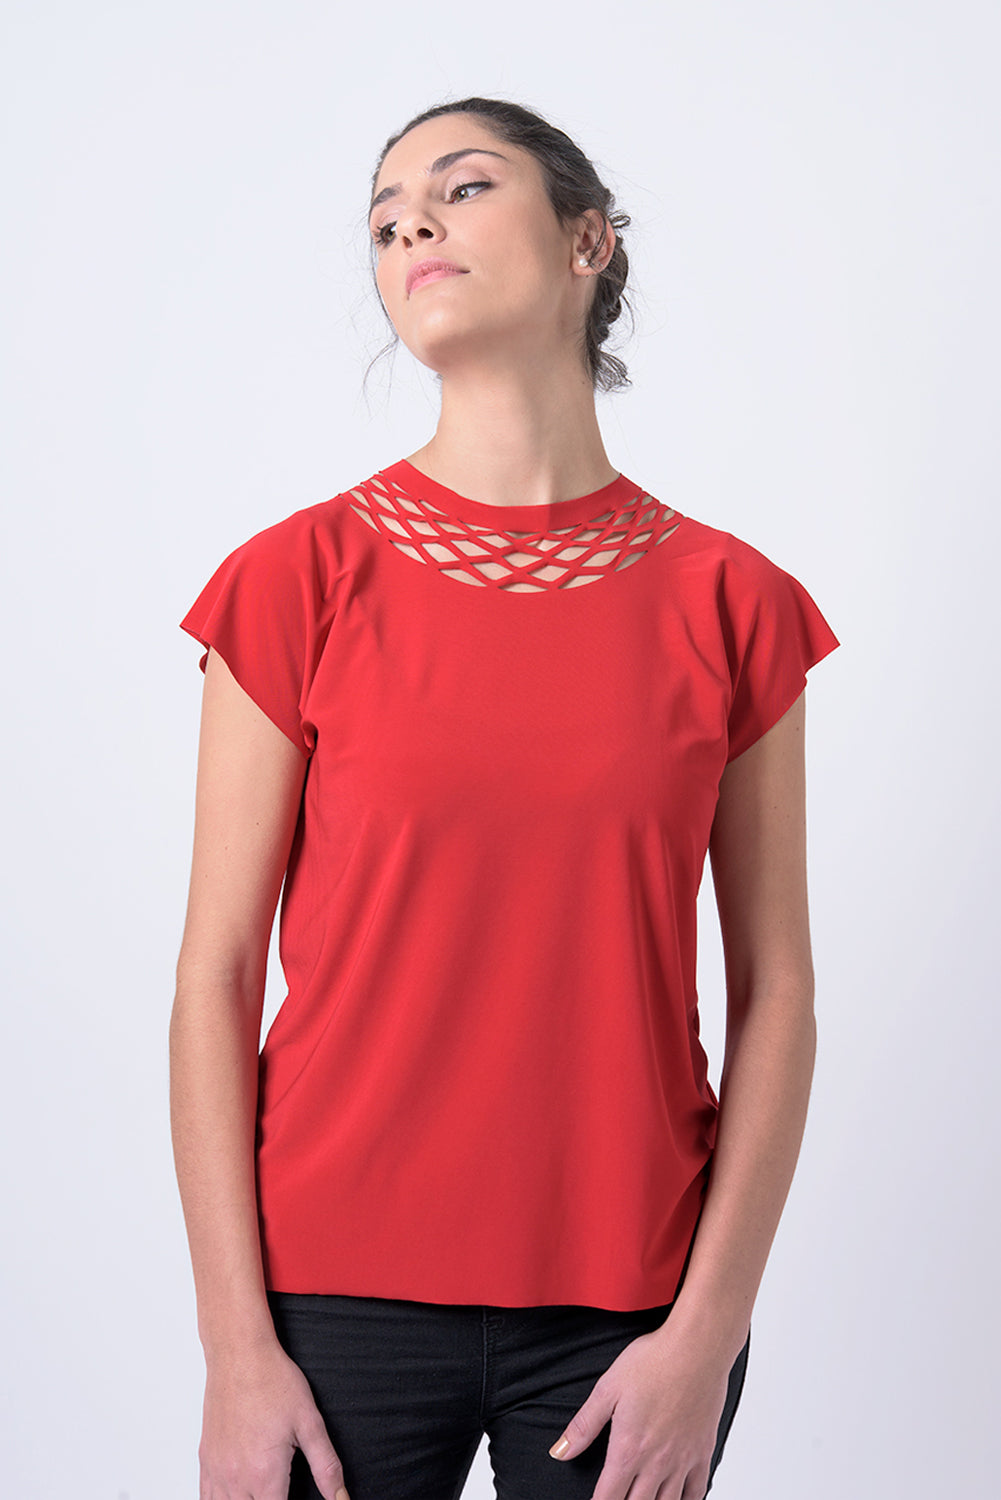 Short sleeve chain shirt - Theta shirt - Red shirt